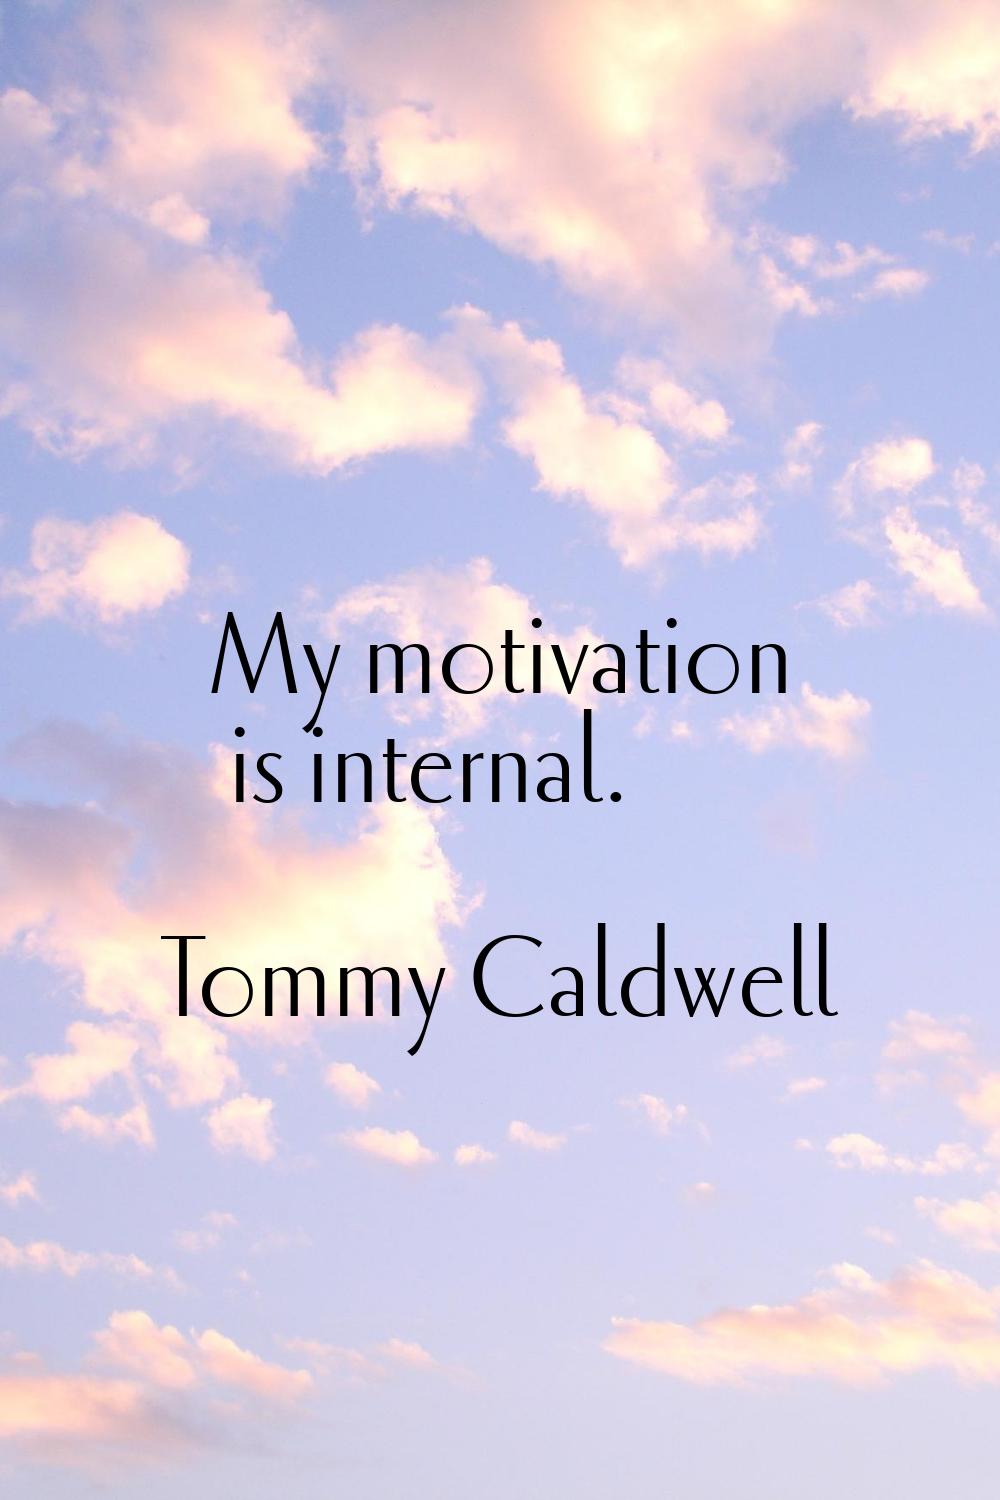 My motivation is internal.